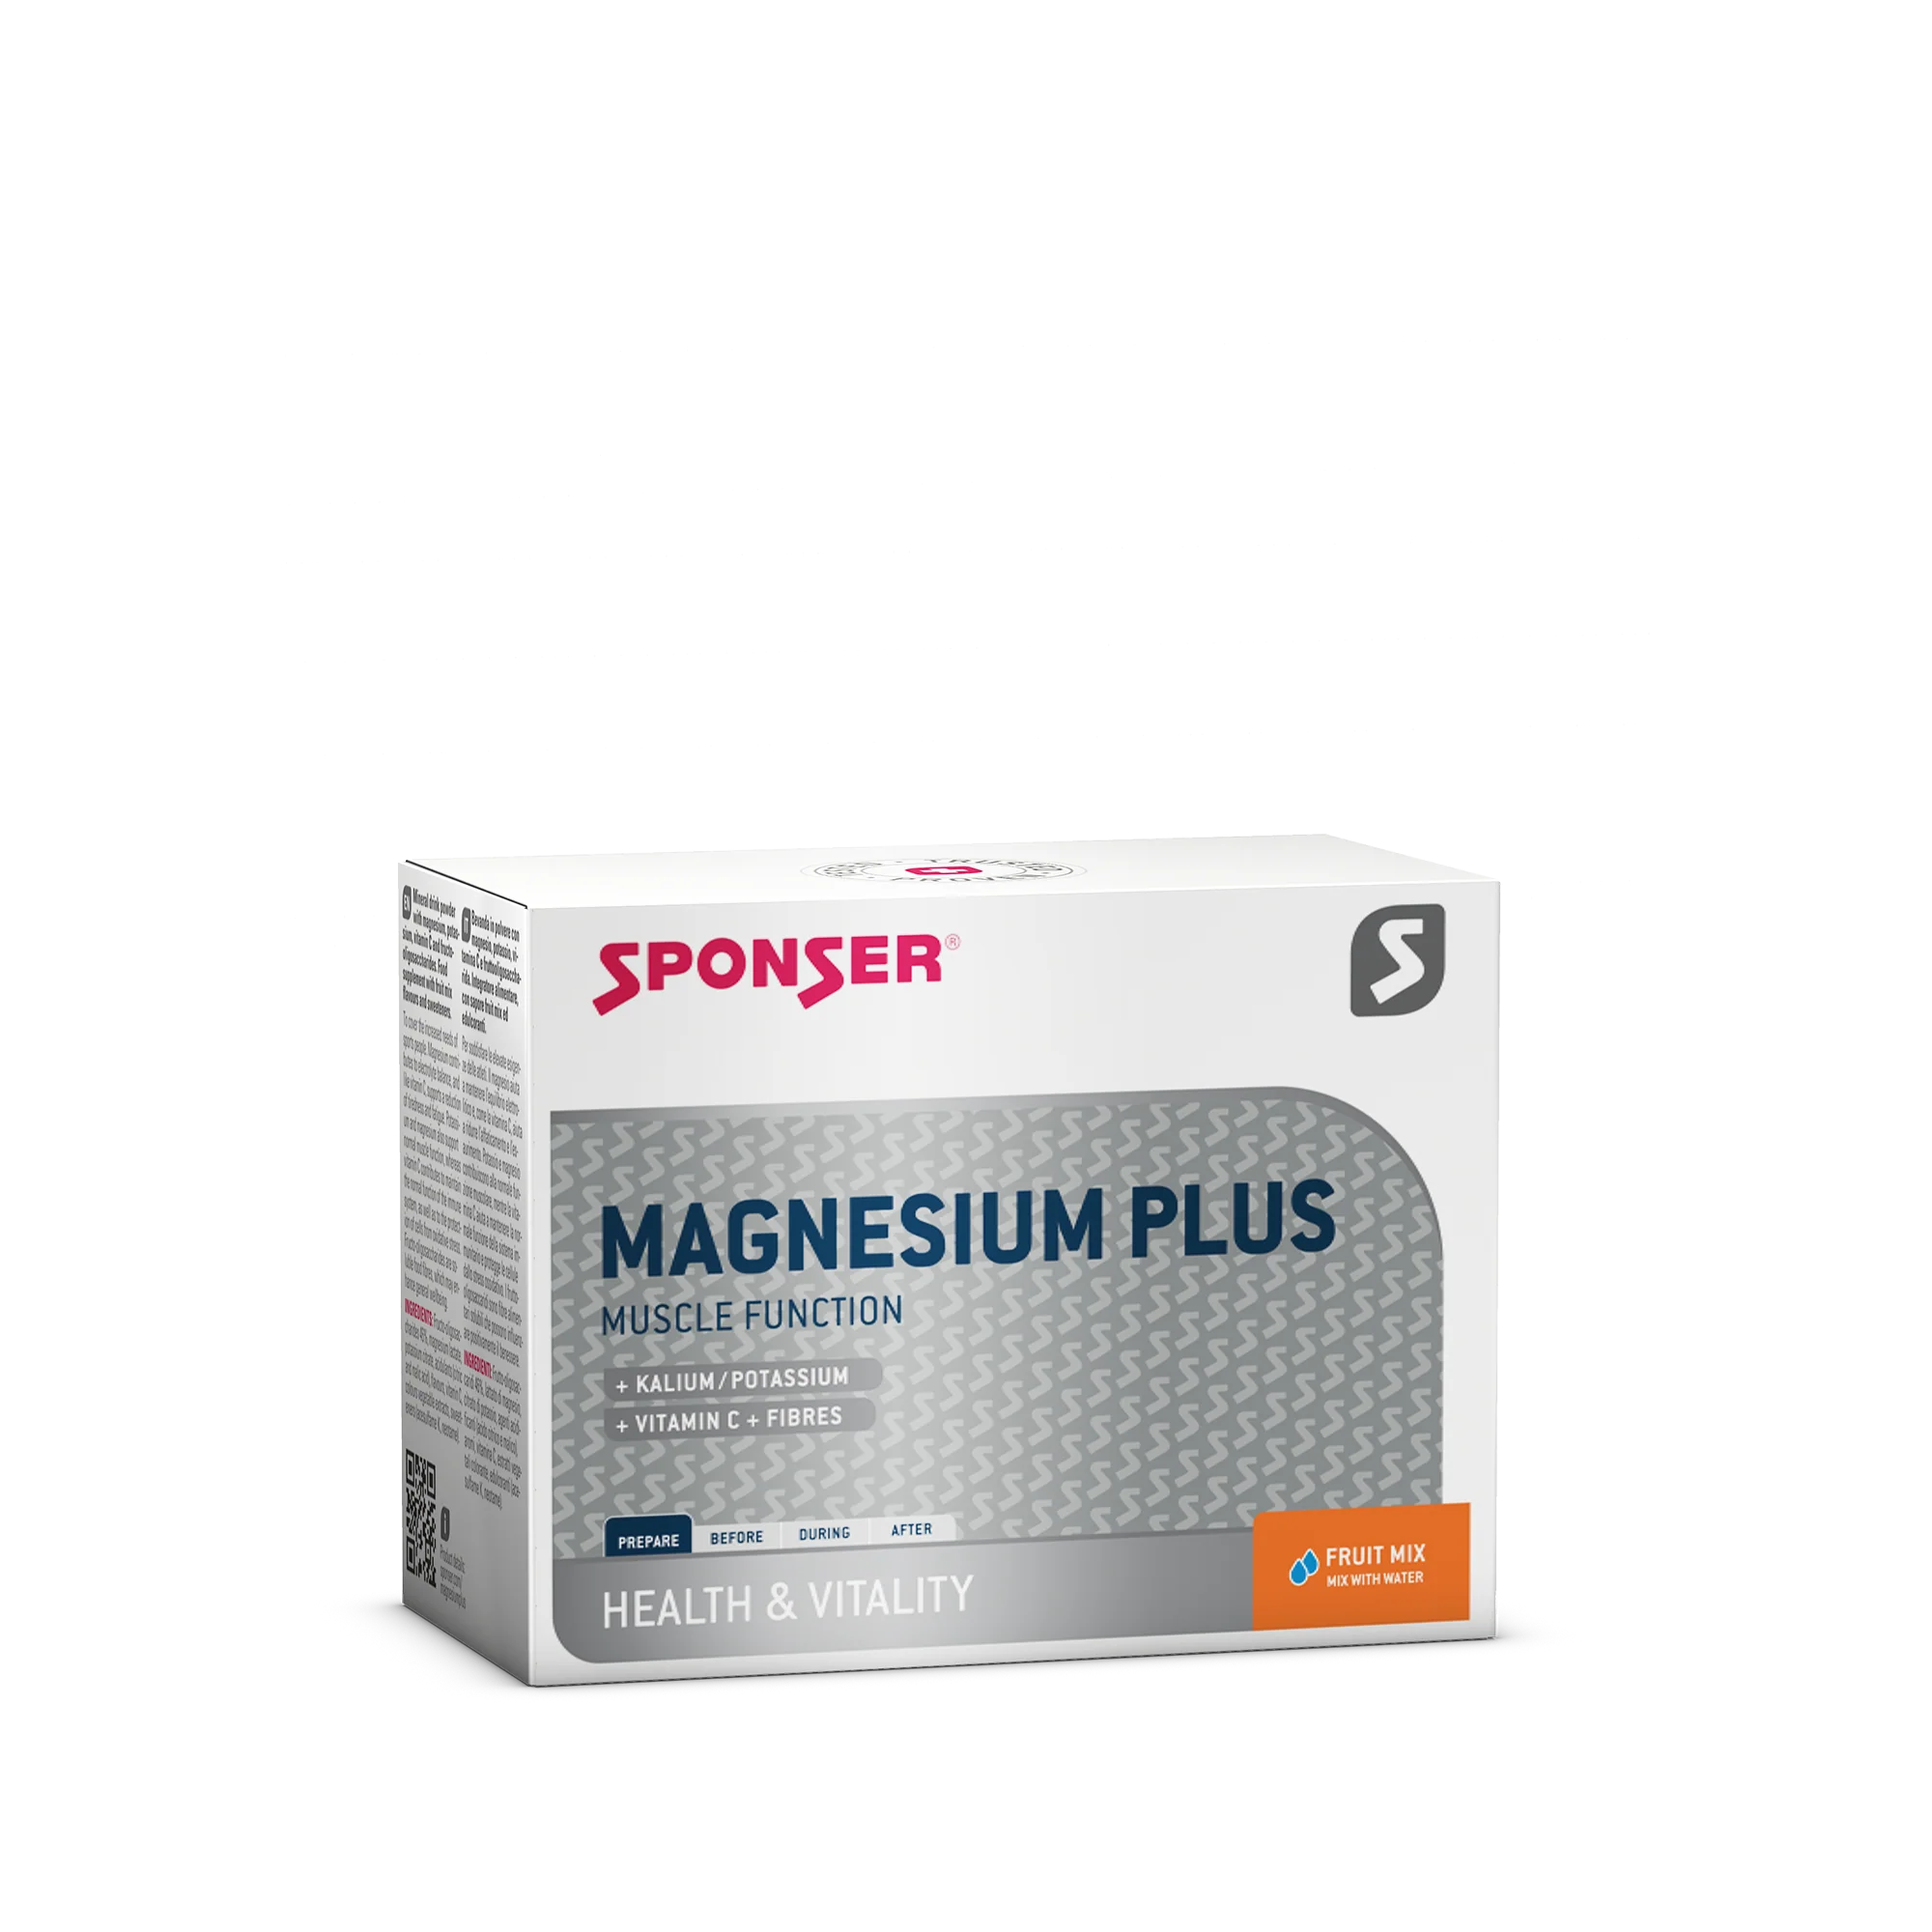 Sponser Magnesium Plus joogipulber 6,5g